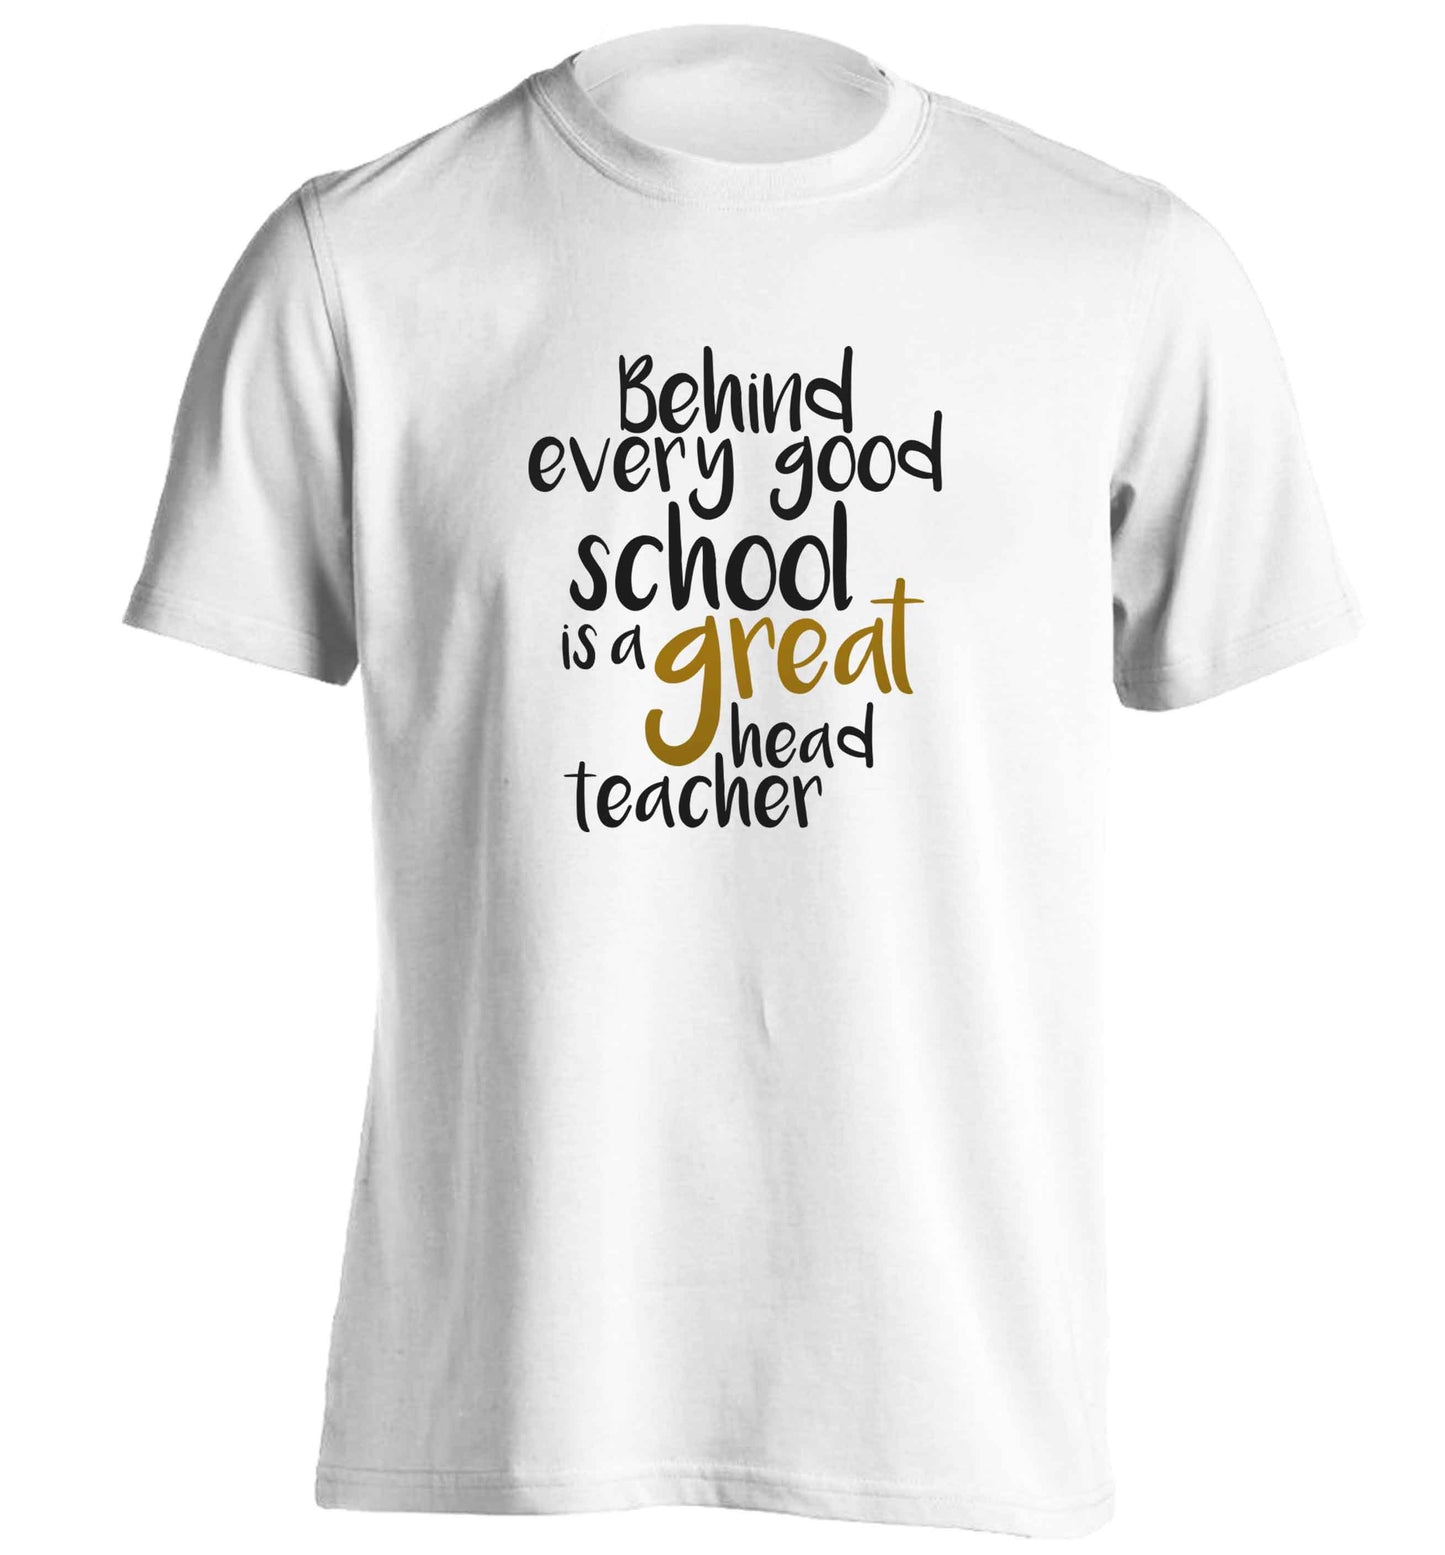 Behind every good school is a great head teacher adults unisex white Tshirt 2XL